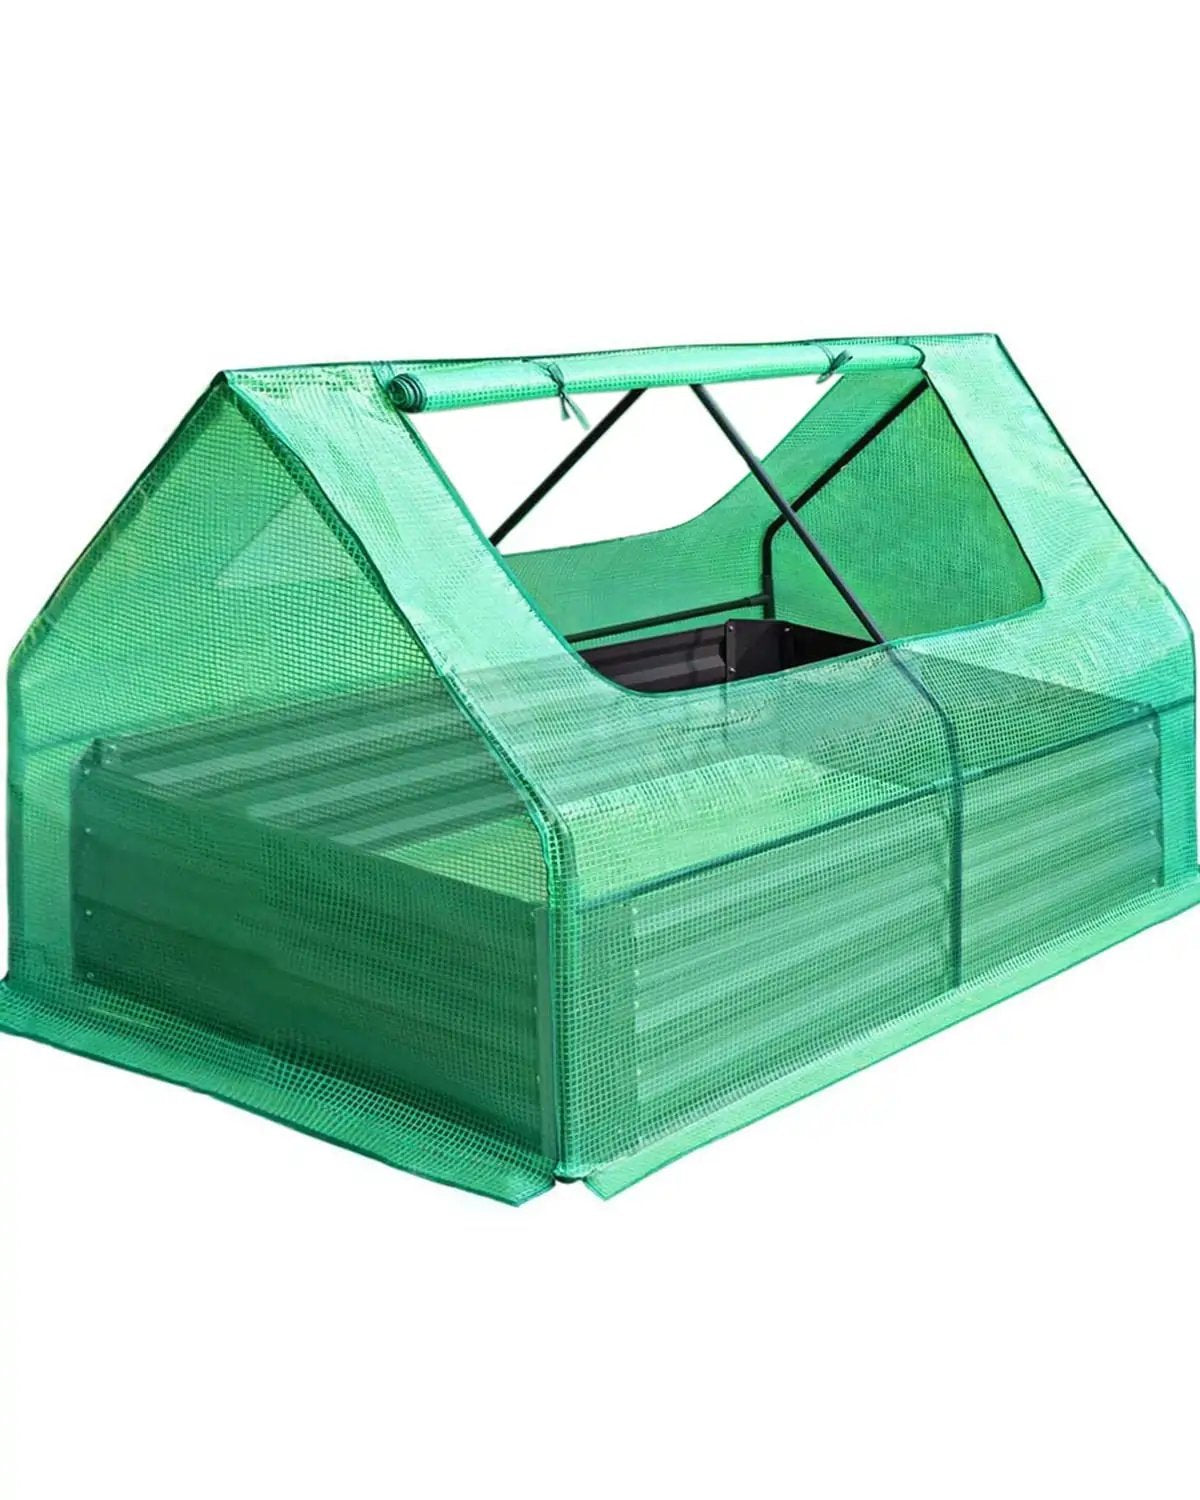  Furniture Neon Lights tent, greenhouse